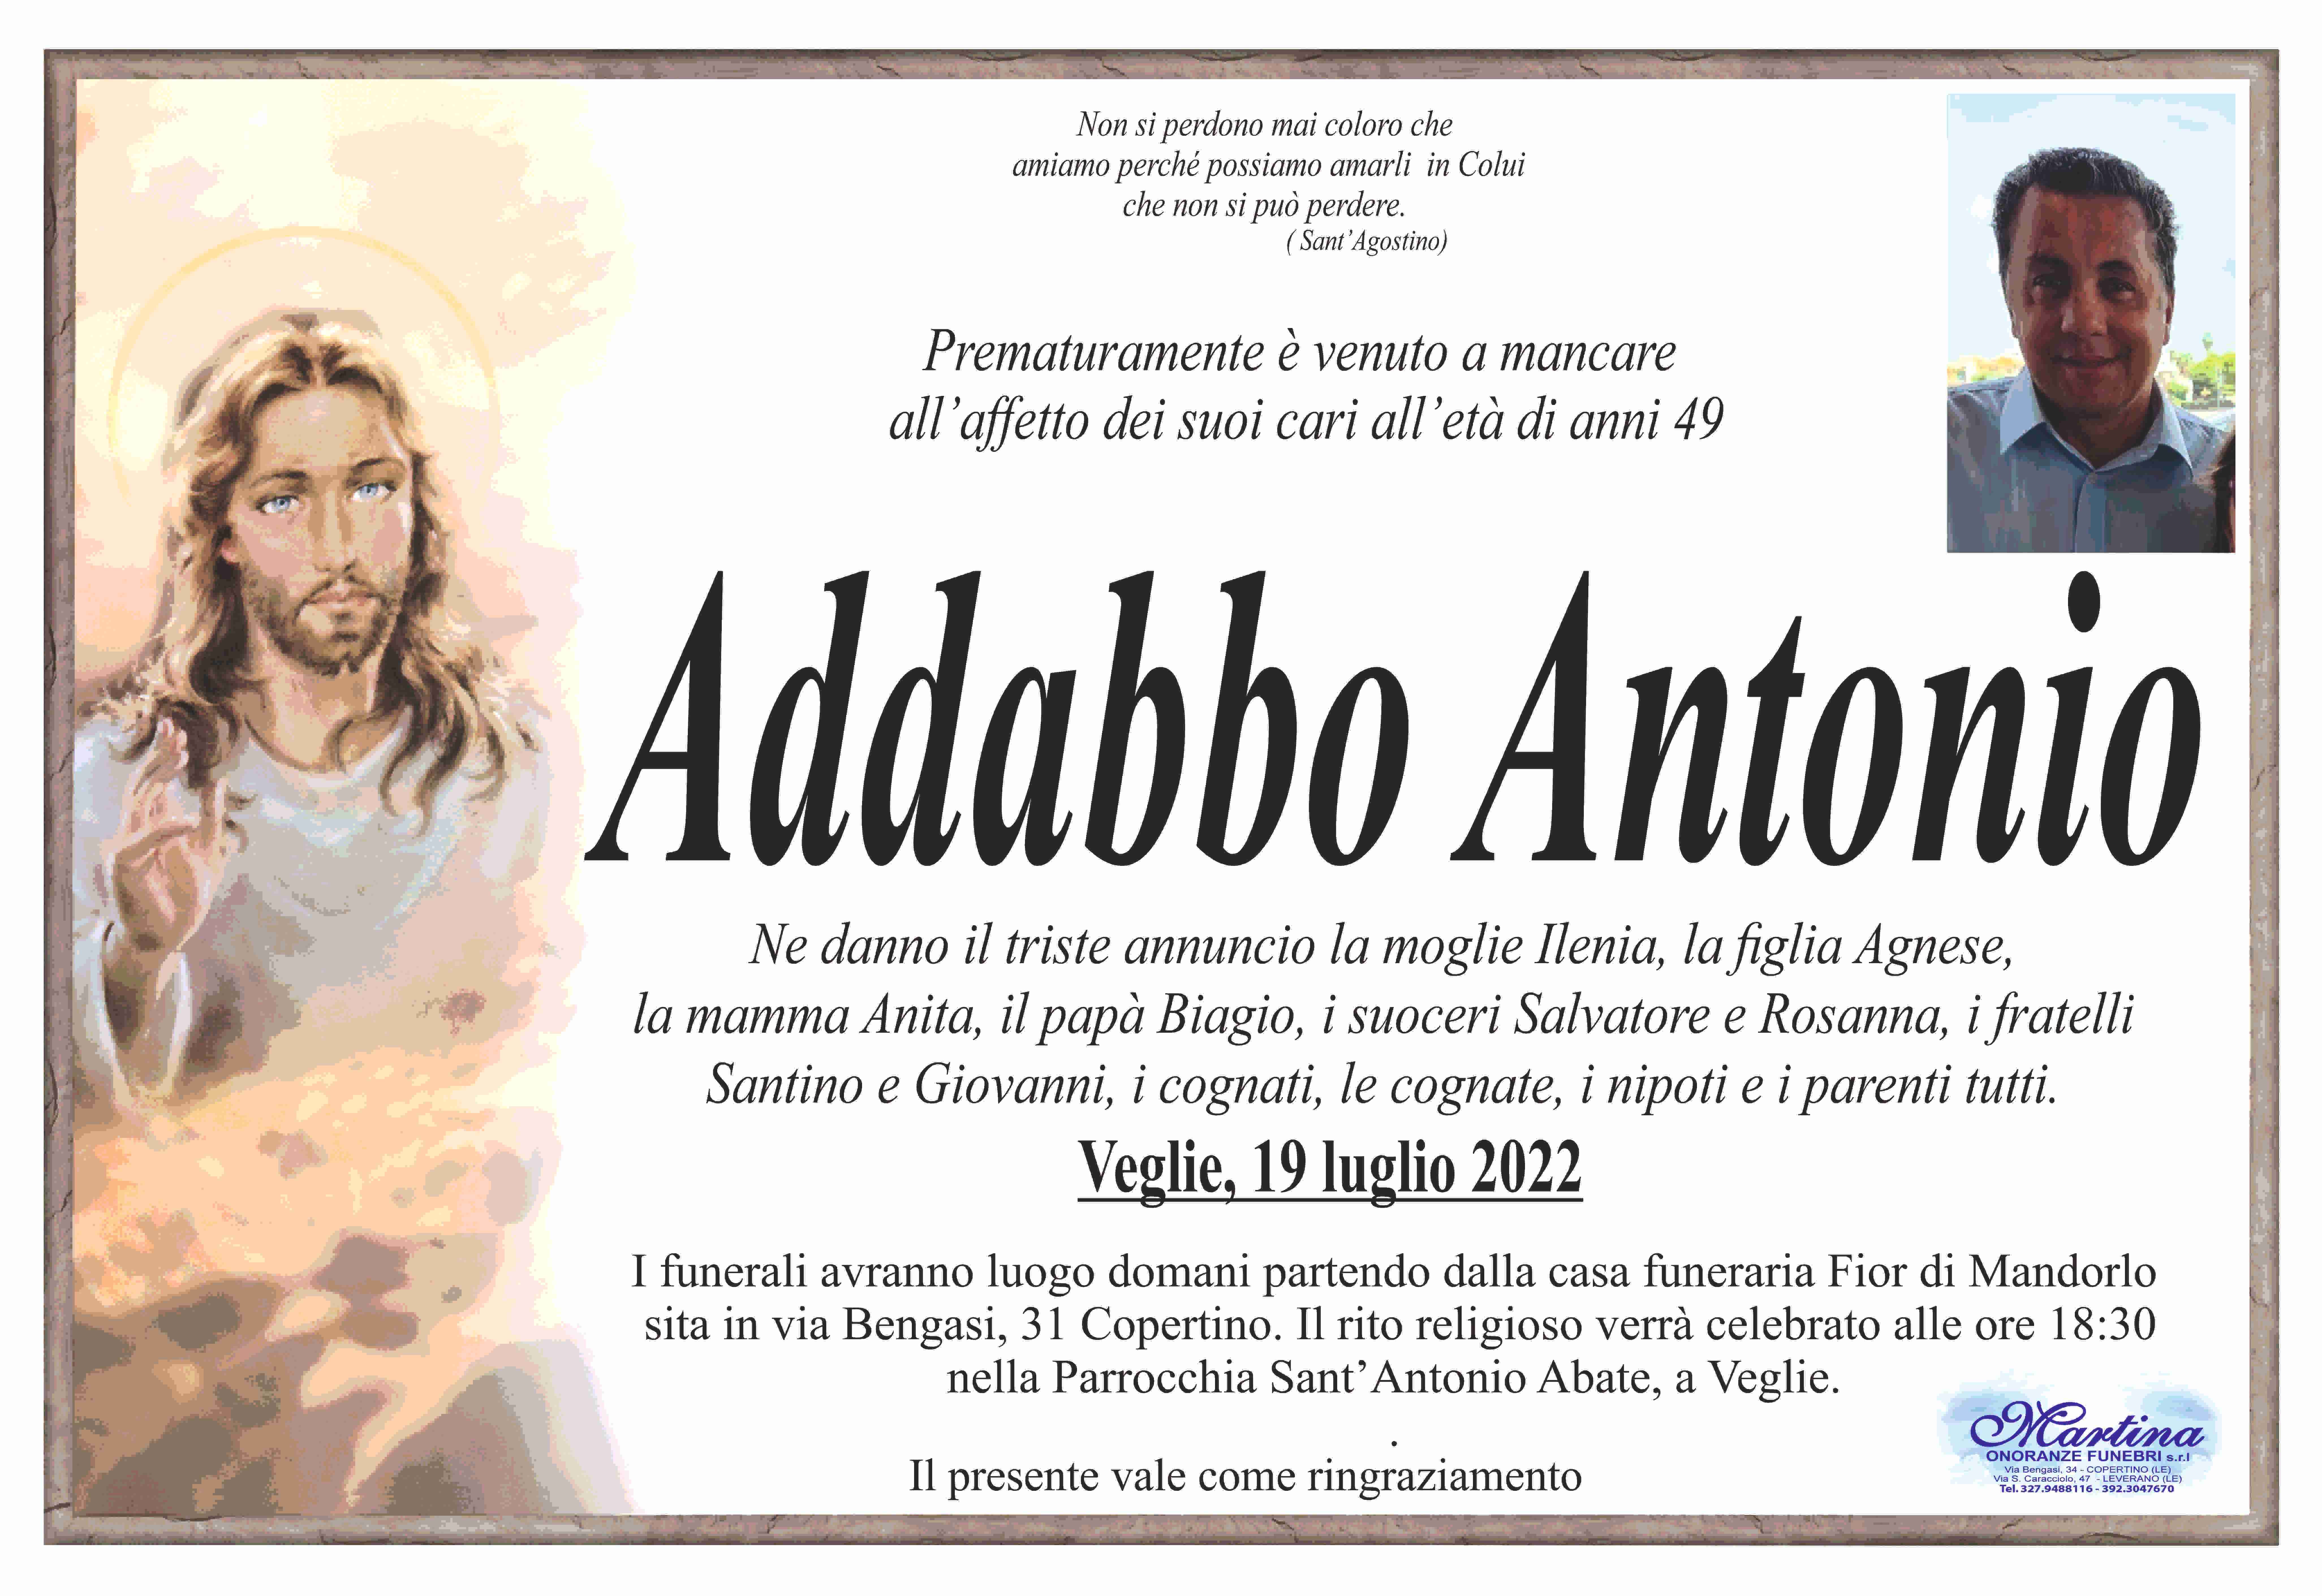 Antonio Addabbo